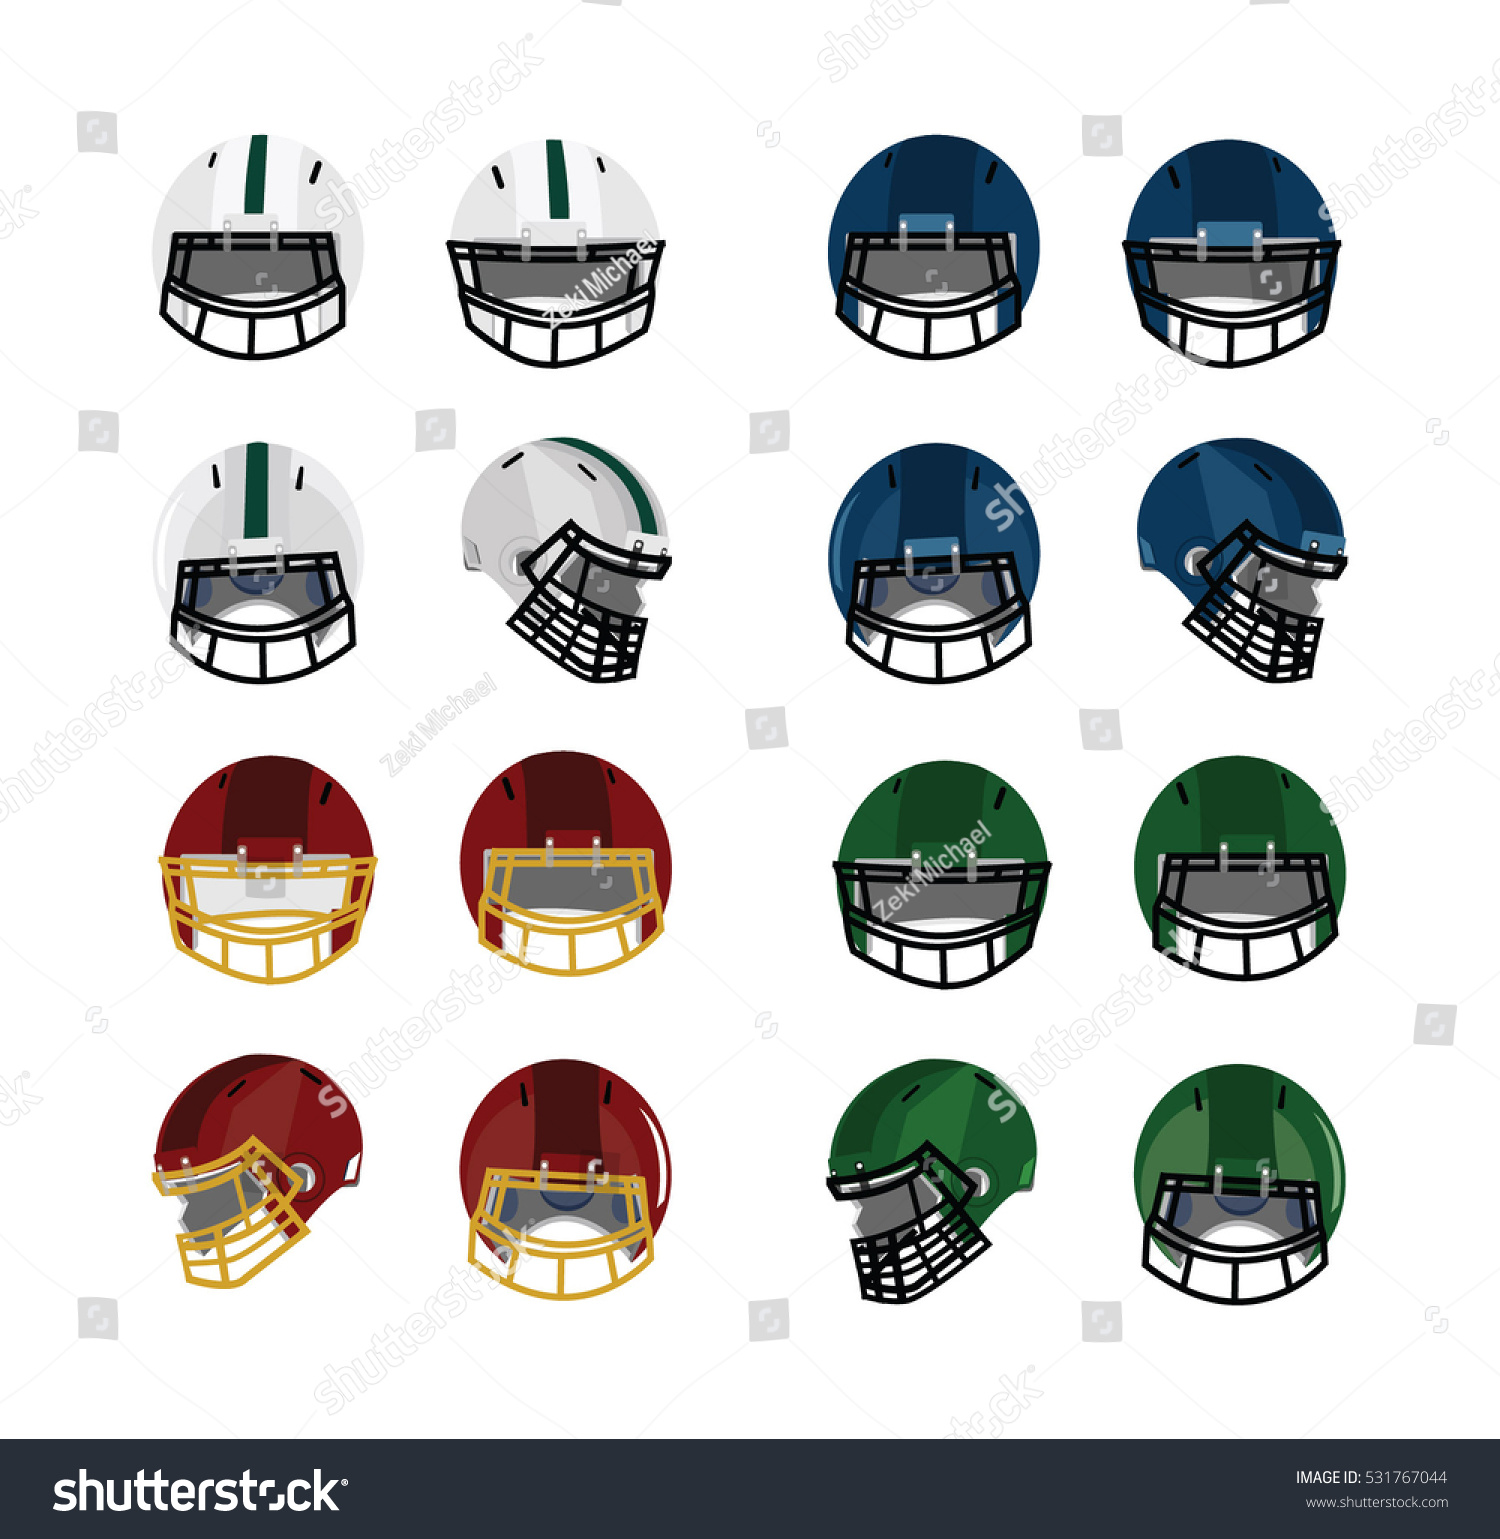 Isolated Vector Football Helmets Stock Vector 531767044 - Shutterstock